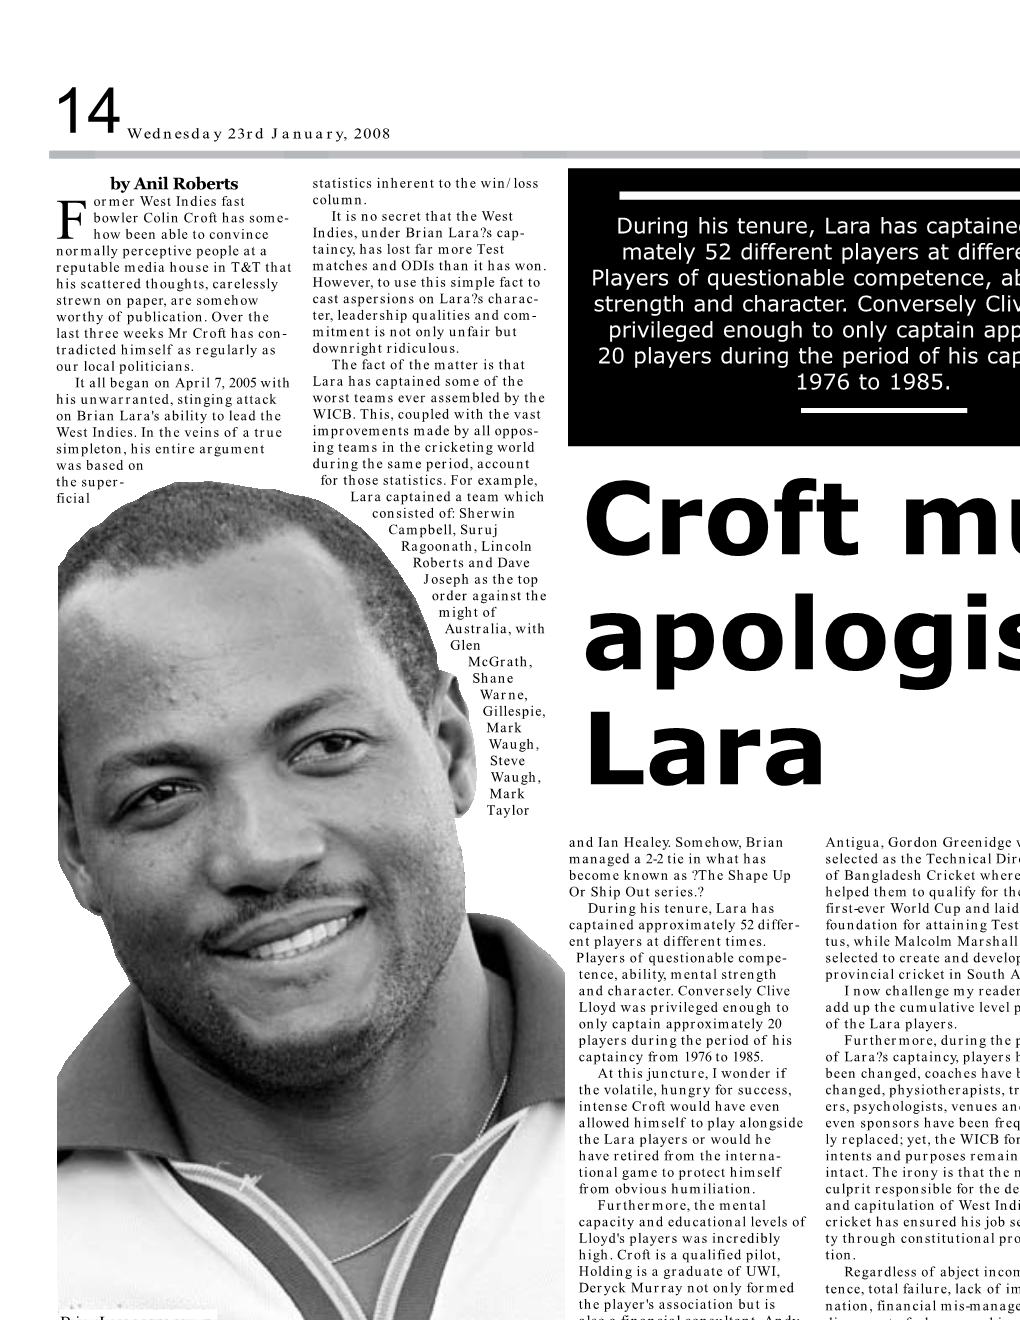 Croft Mu Apologis Lara